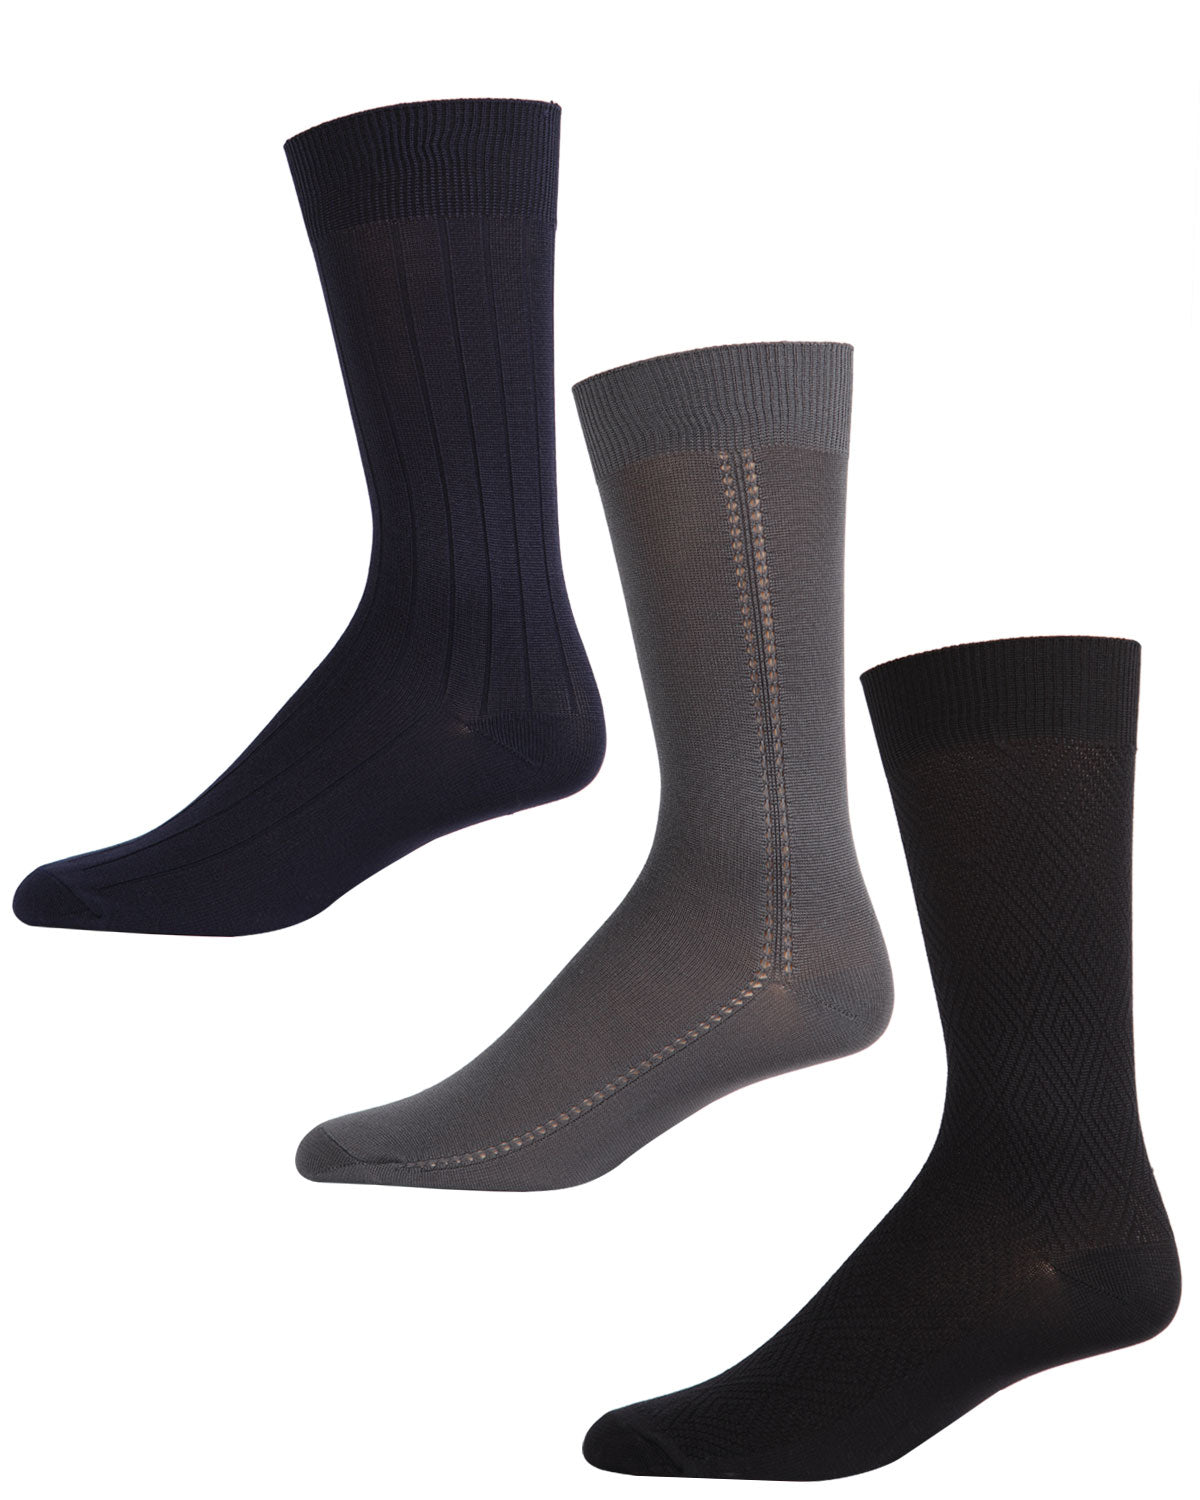 3 Pair Men's Luxury Subtle Patterned Microfiber Crew Socks